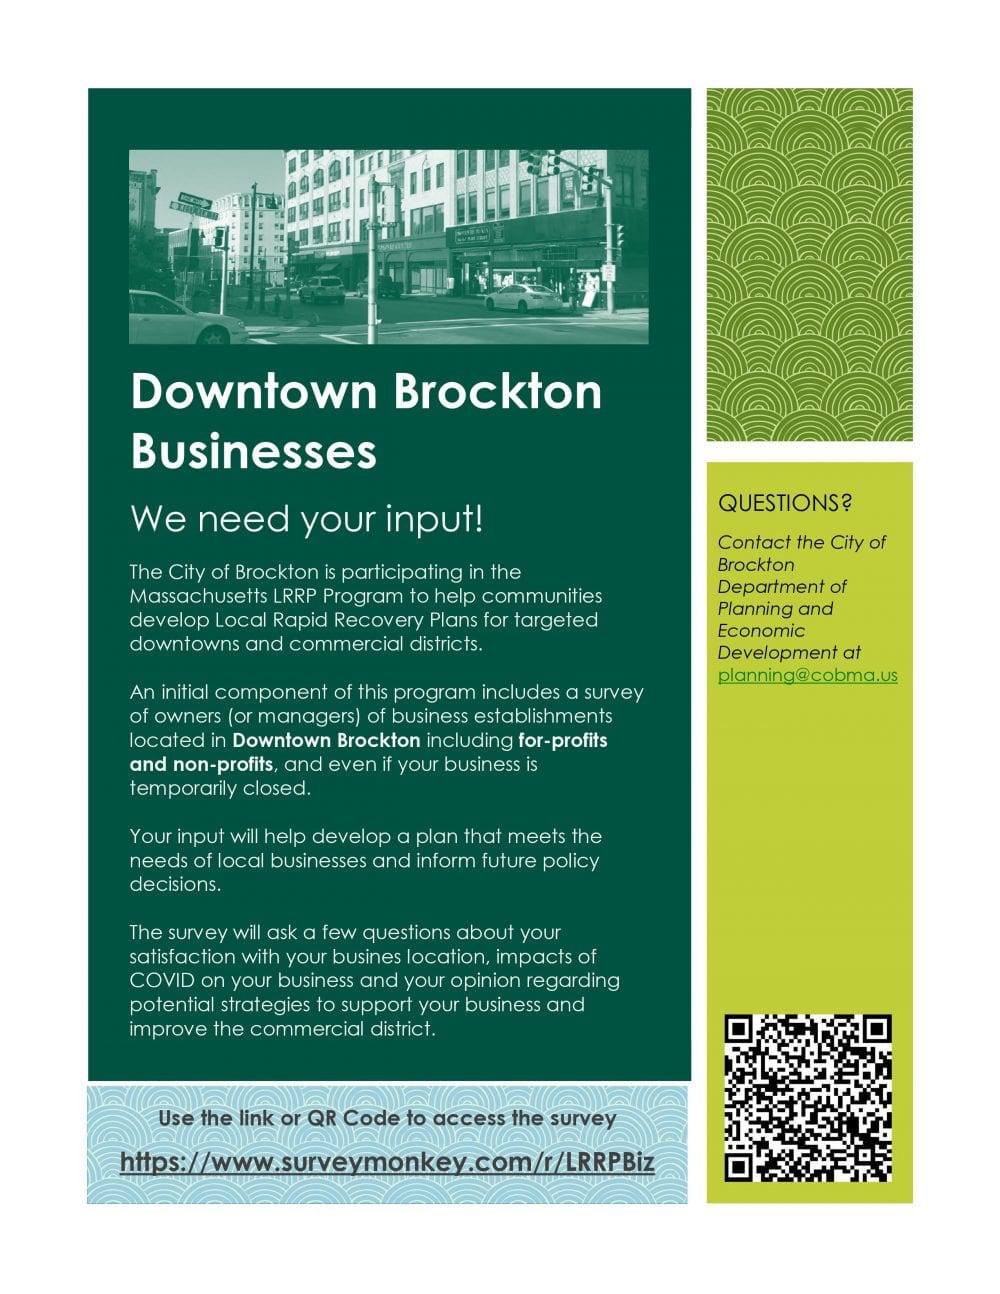 Downtown Brockton Business Survey